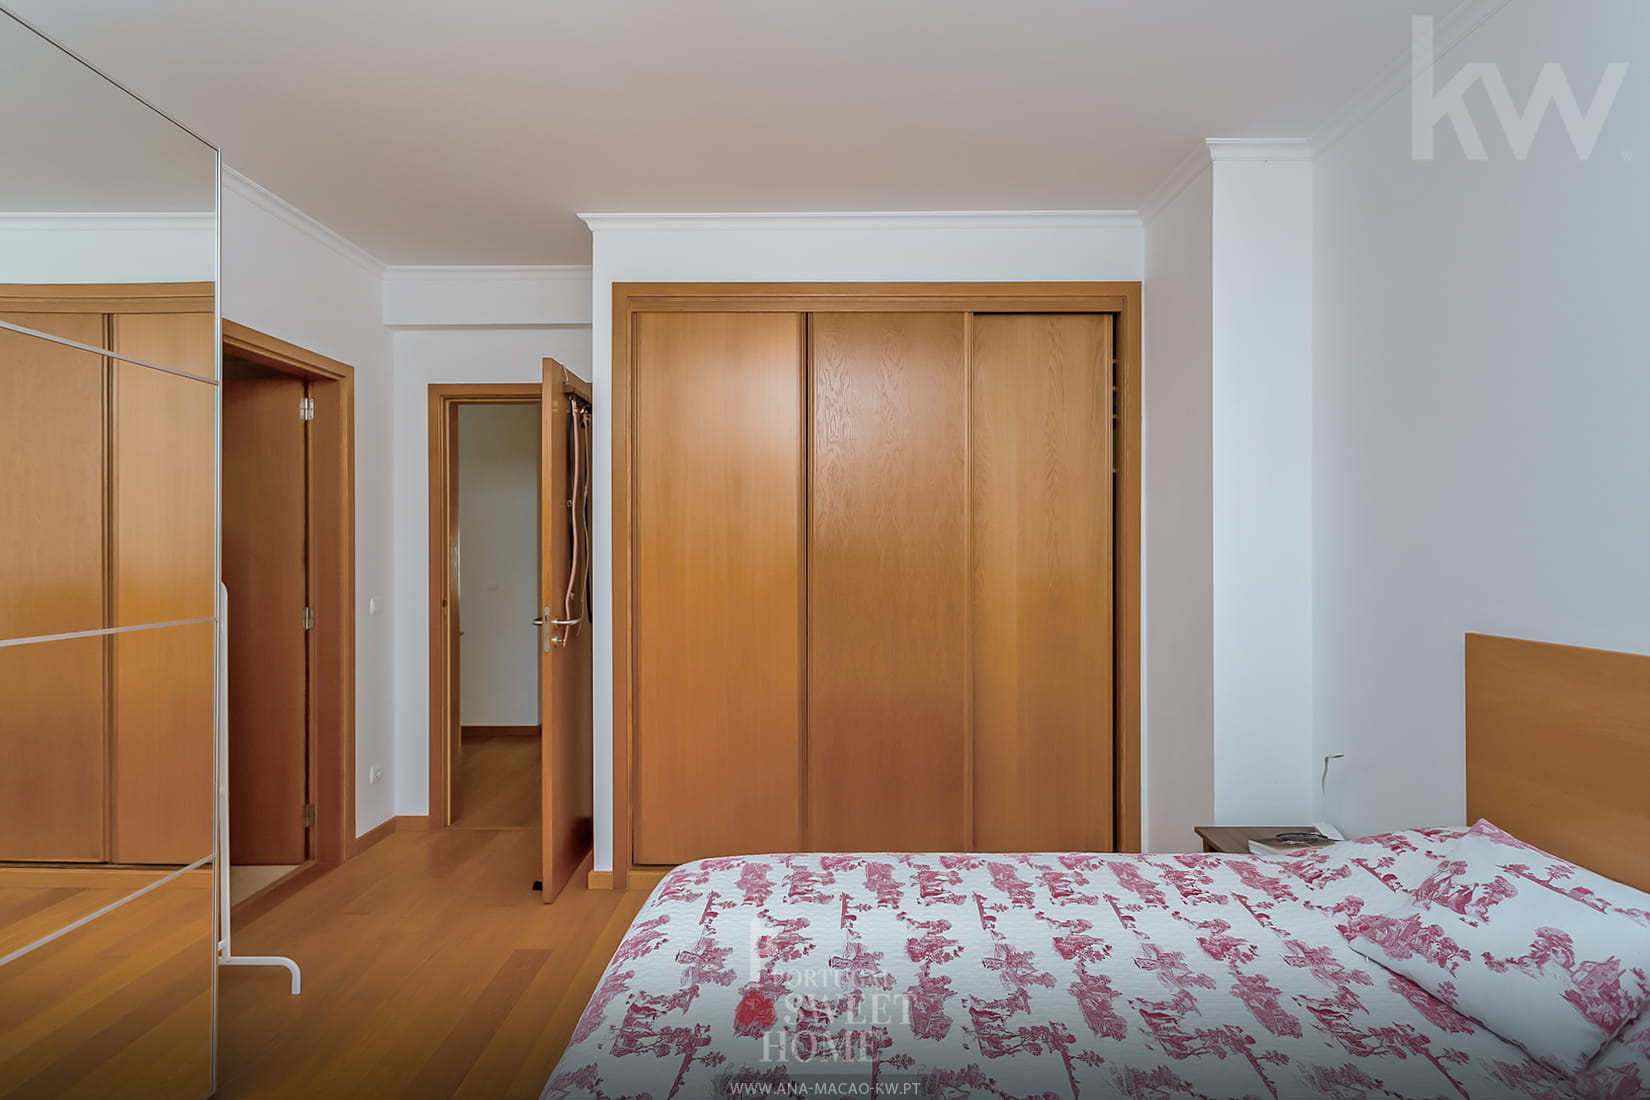 1 Suite (13,4 m²) com WC (5,33 m²)